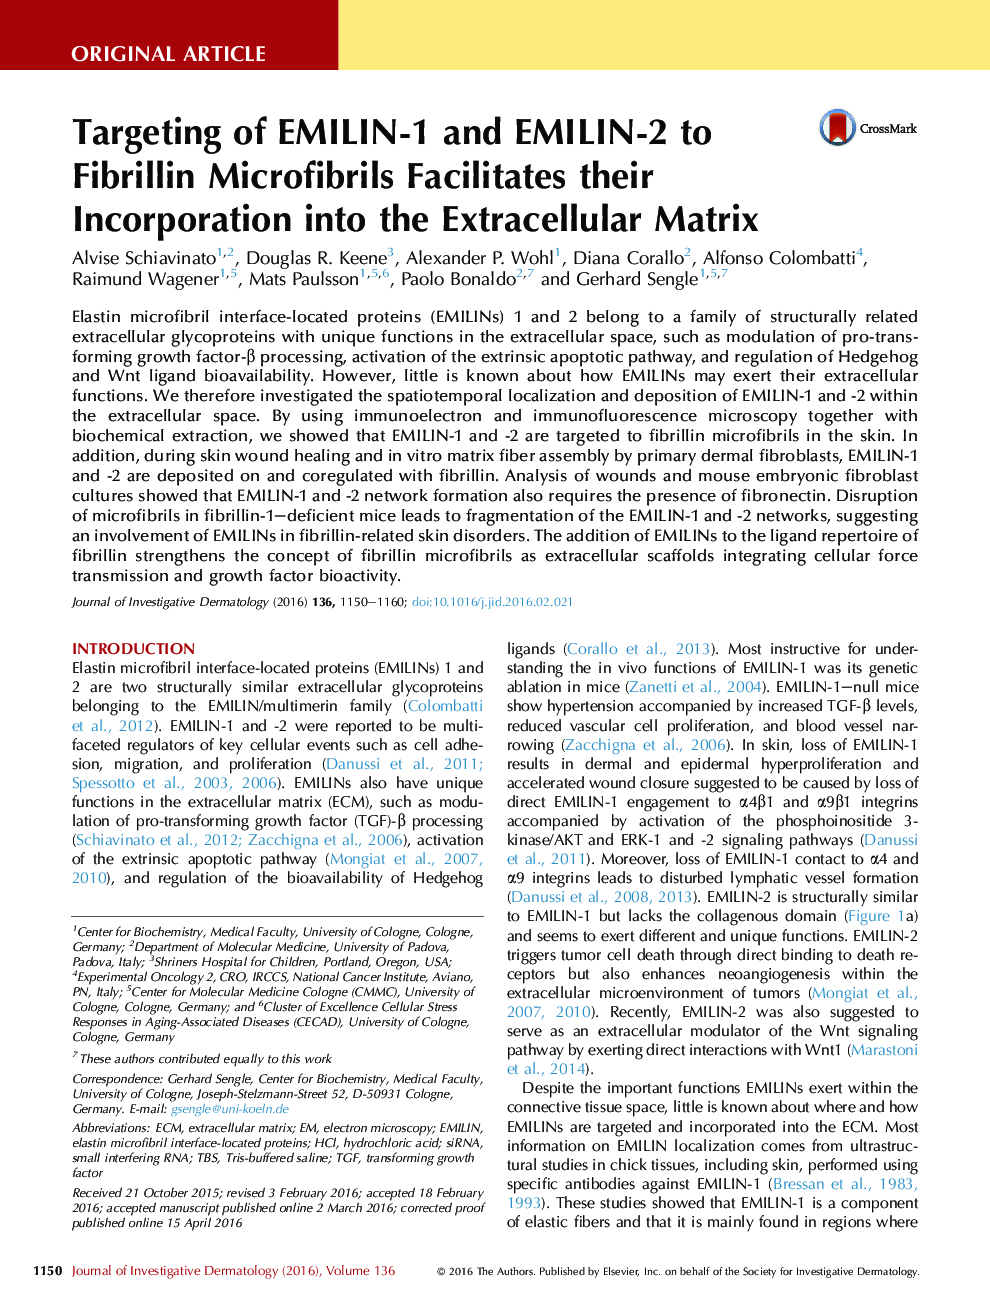 Original ArticleConnective TissueTargeting of EMILIN-1 and EMILIN-2 to Fibrillin Microfibrils Facilitates their Incorporation into the Extracellular Matrix